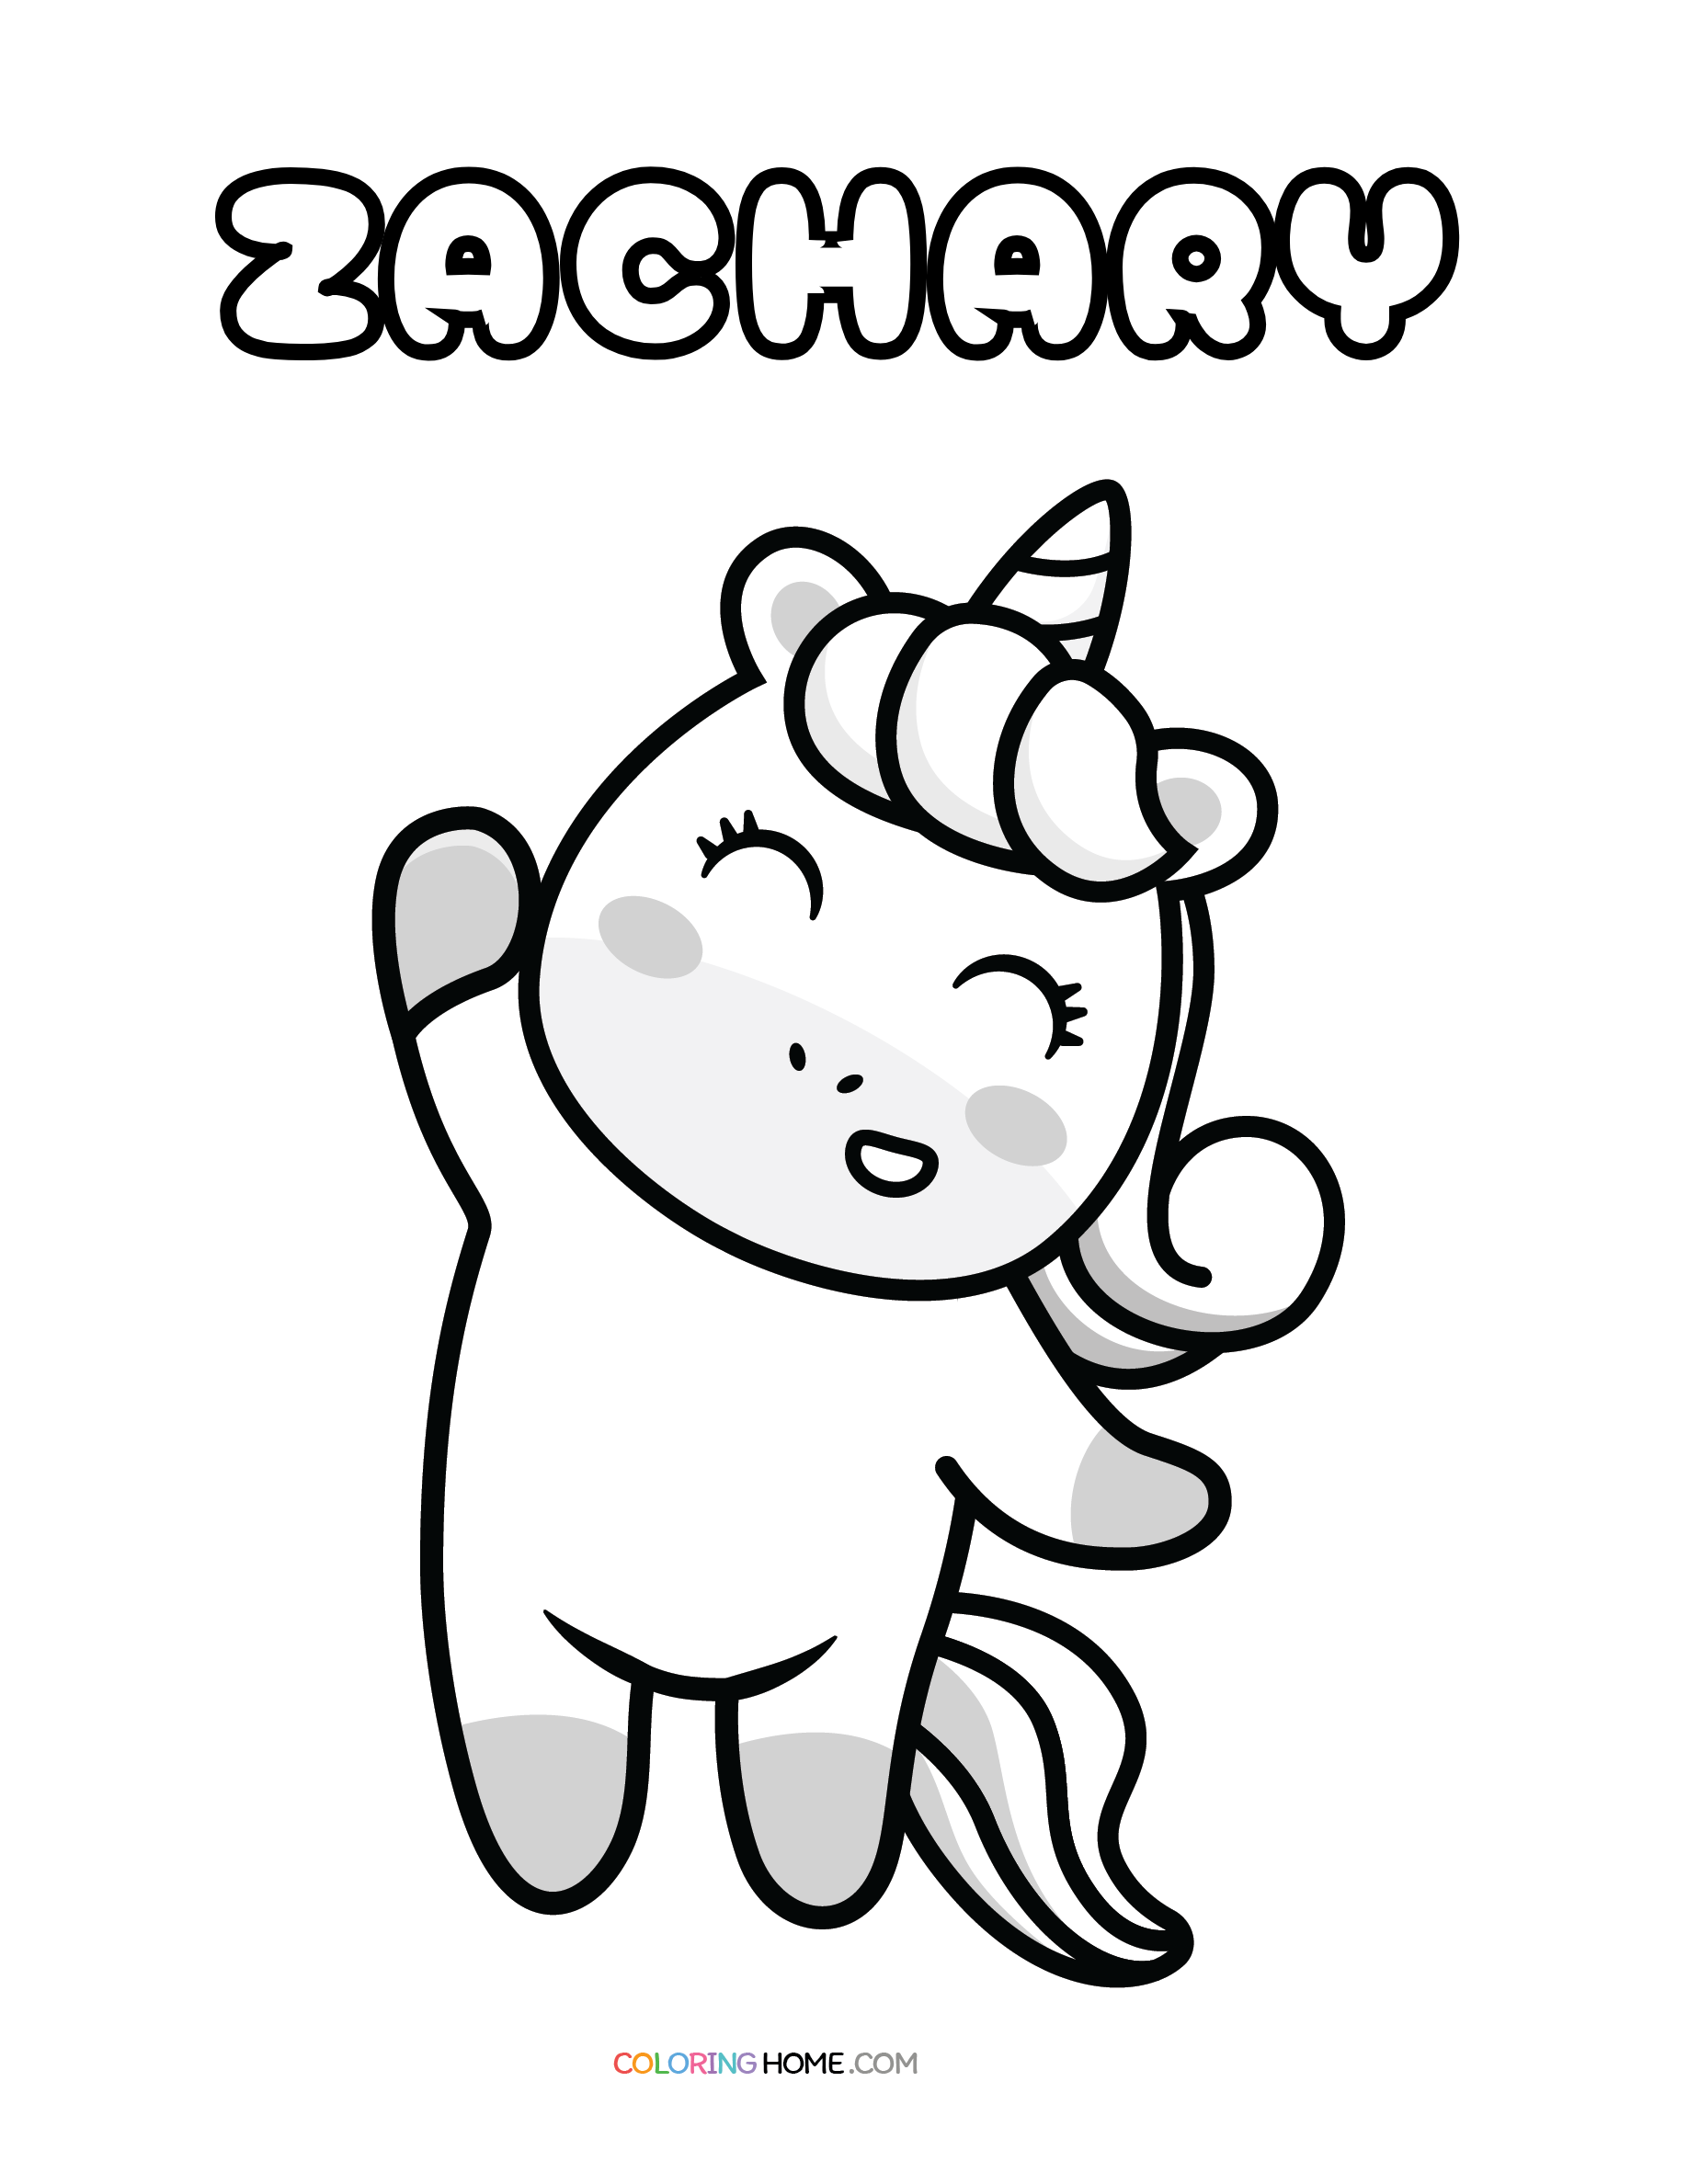 Zachary unicorn coloring page